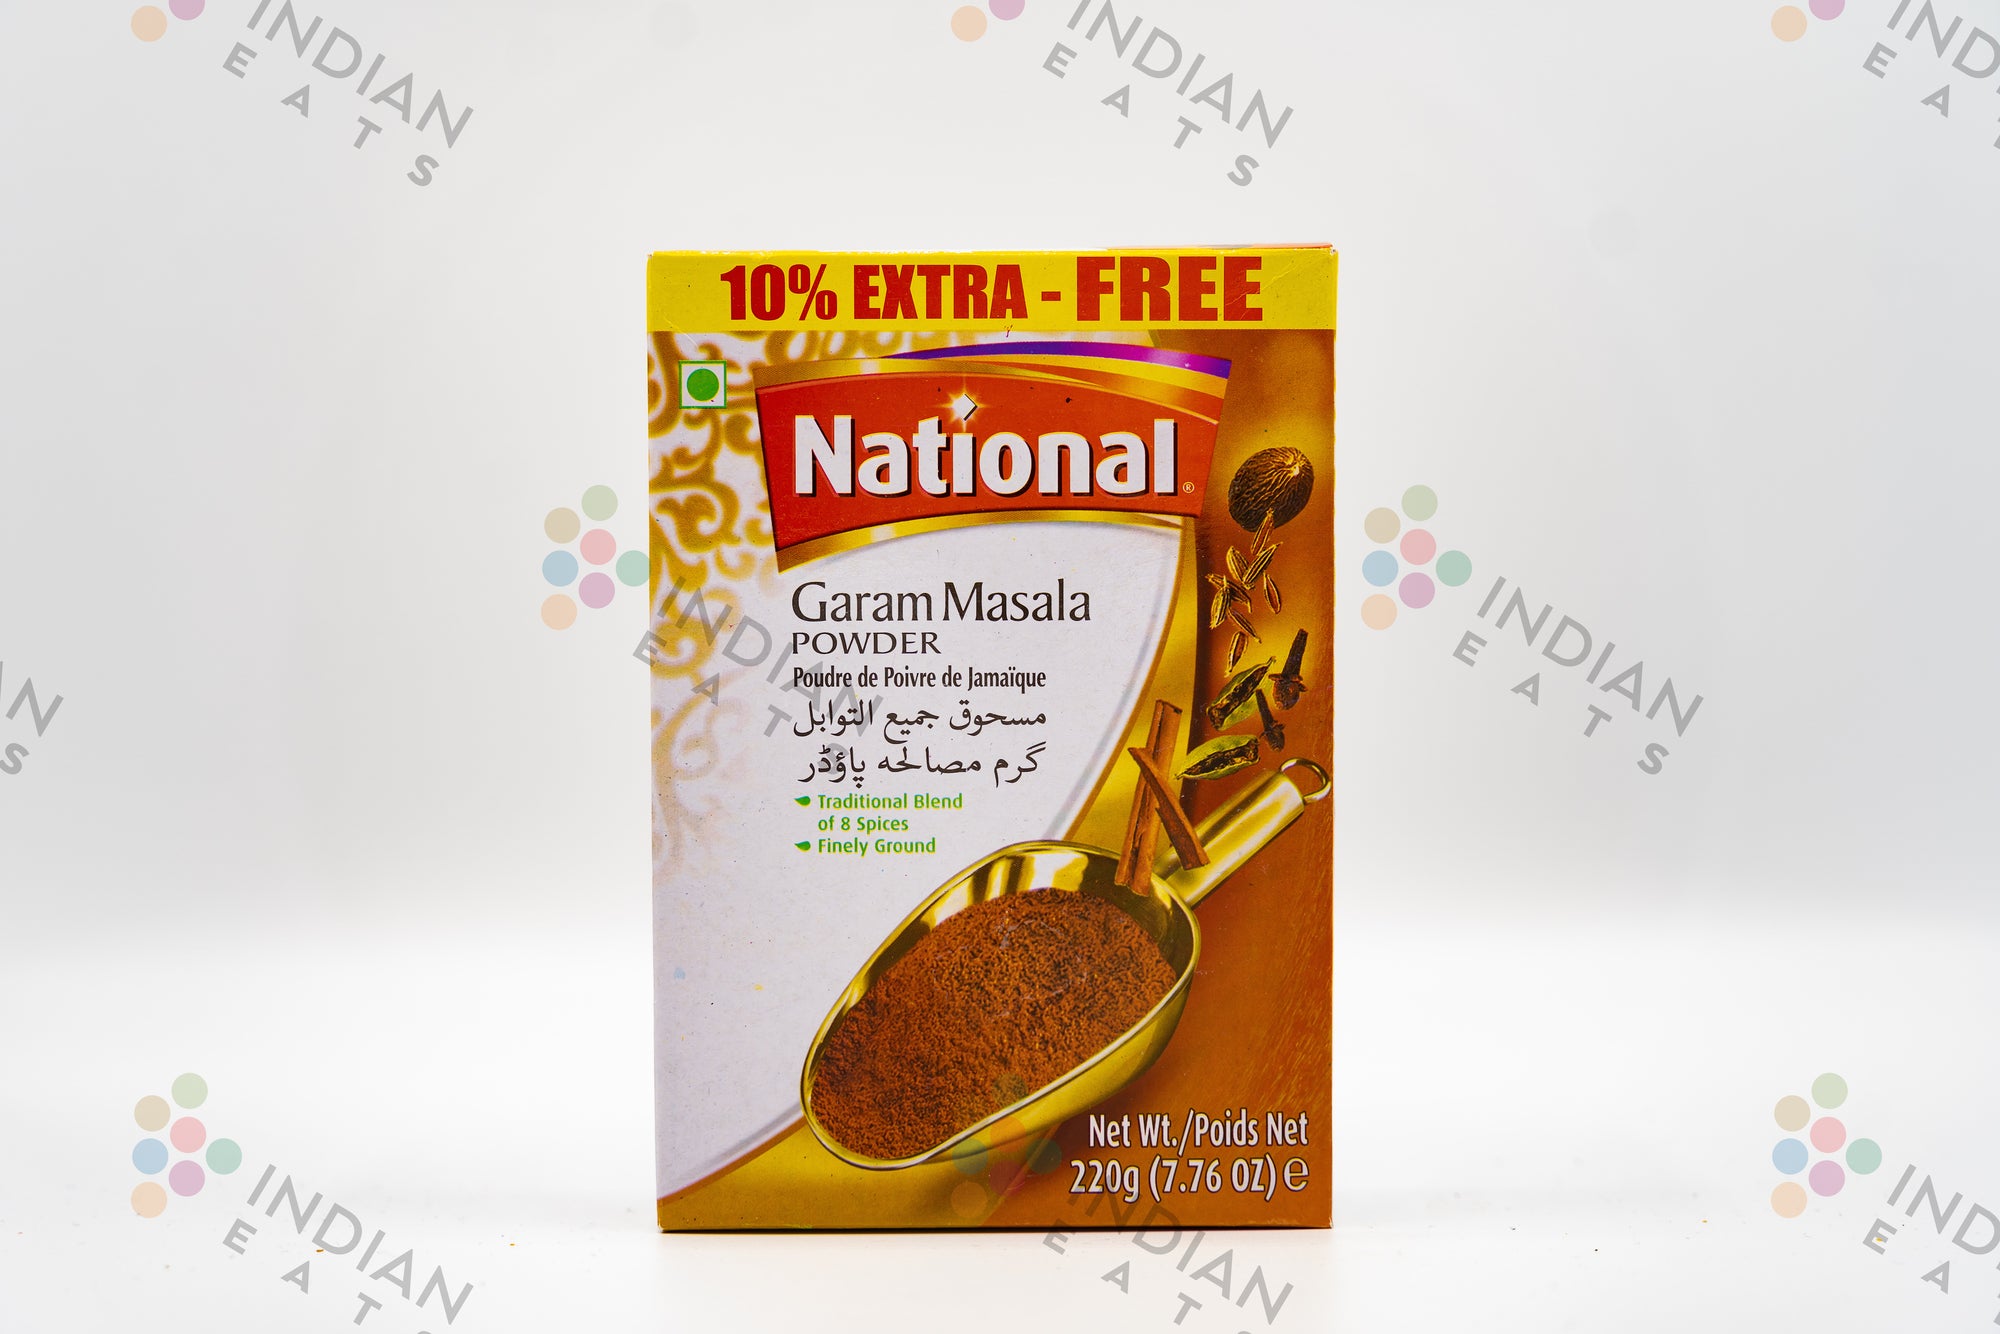 National Garam Masala Powder - Indian Eats